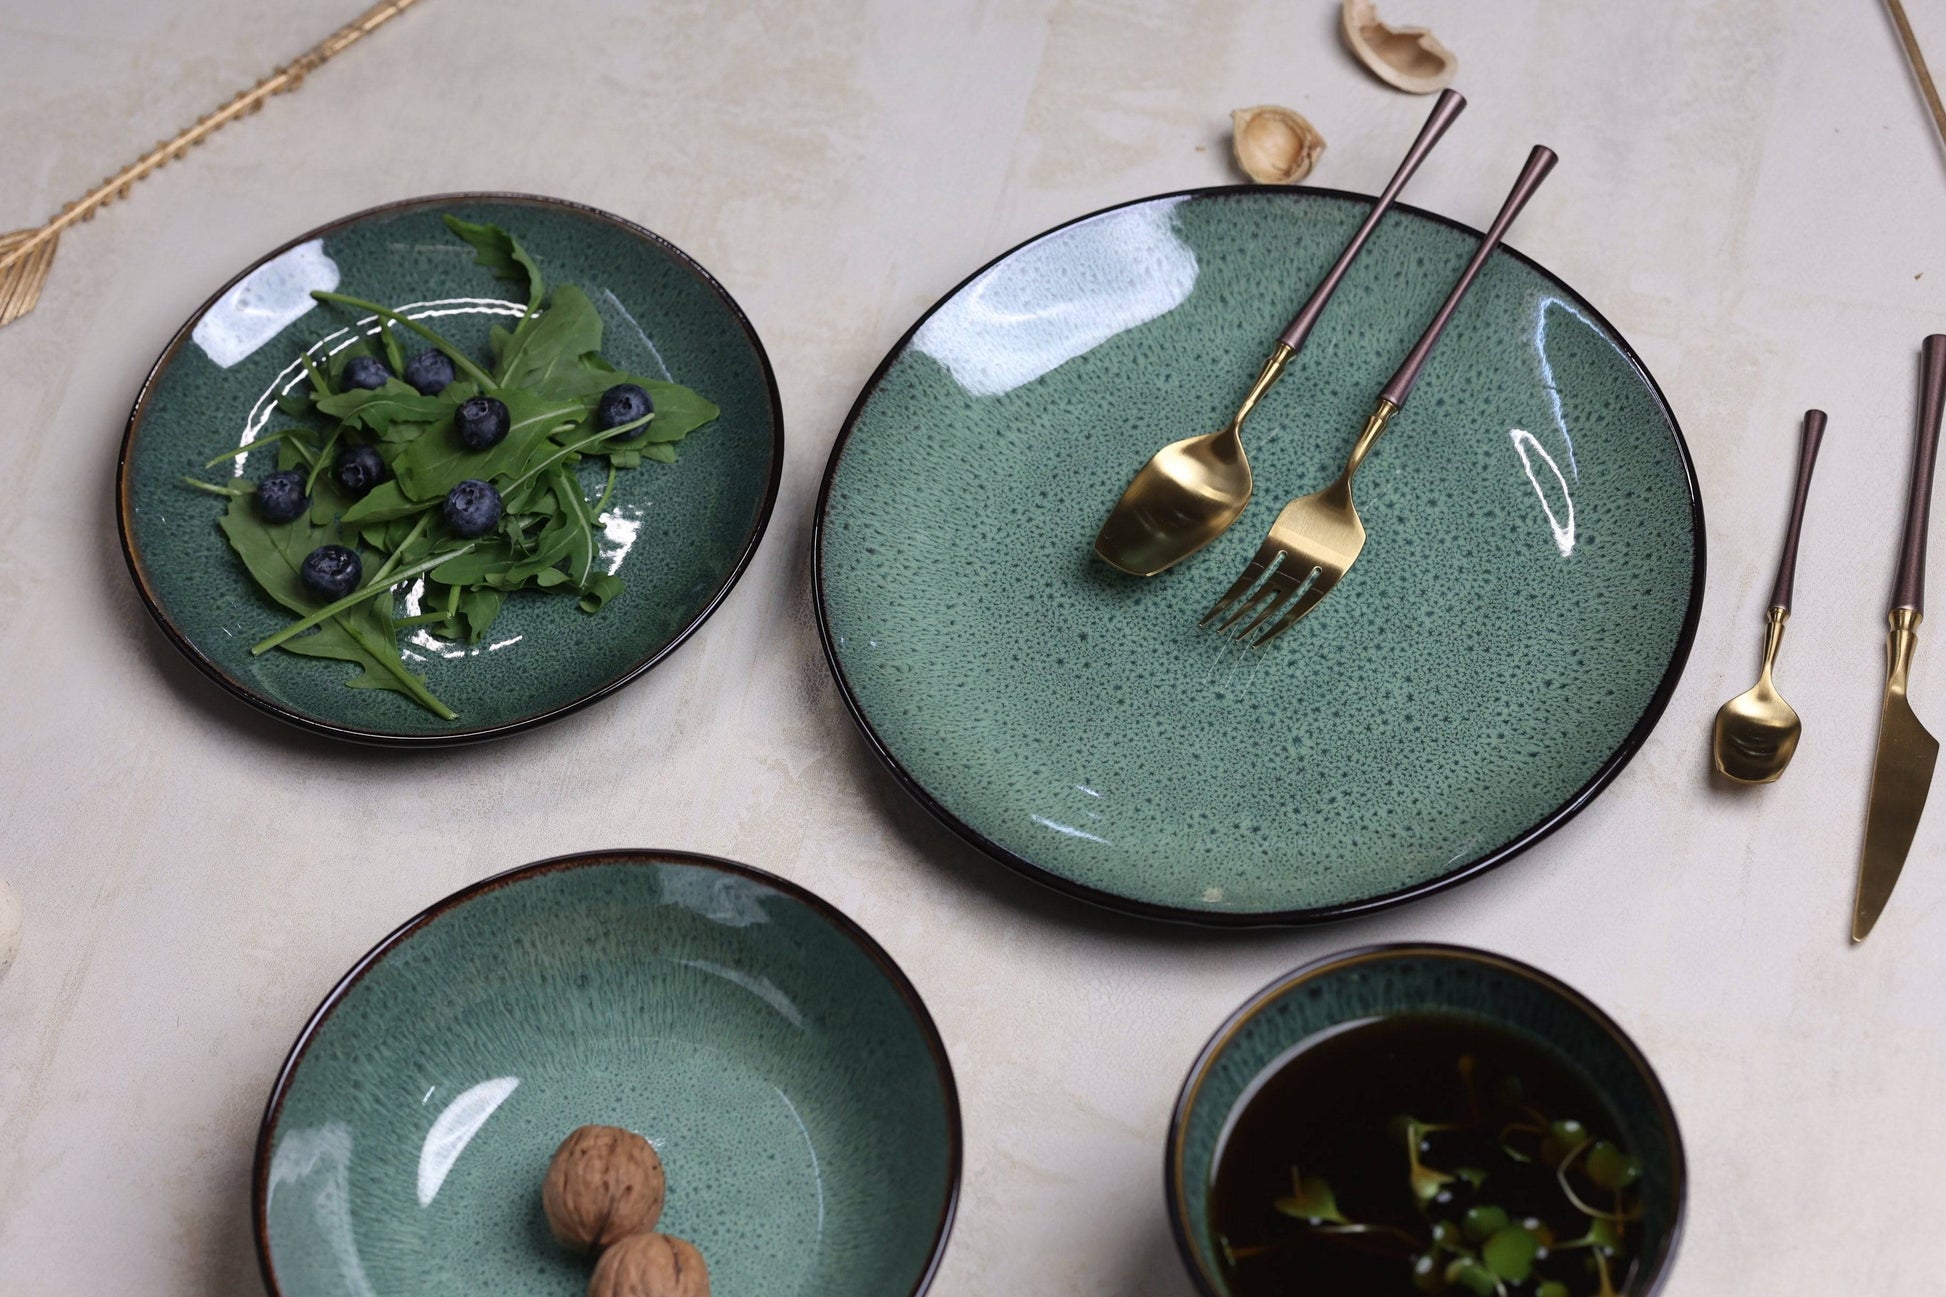 Luxury Inpensus Dinnerset Ceramic Green Serving Bowl (Large) - The Decor Circle